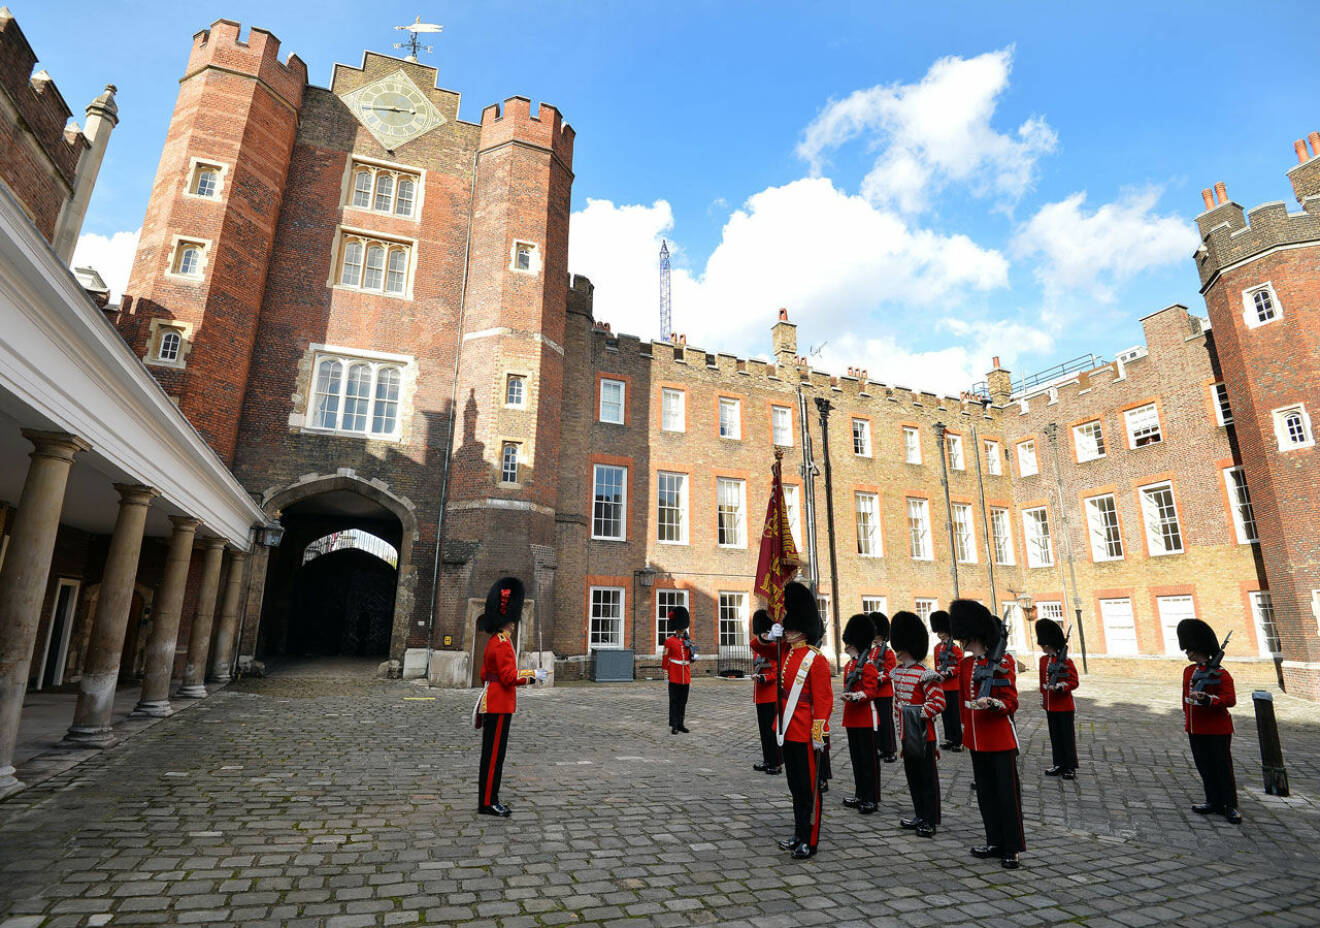 St James's Palace i London – här ligger prinsessan Beatrices bröllopskyrka.